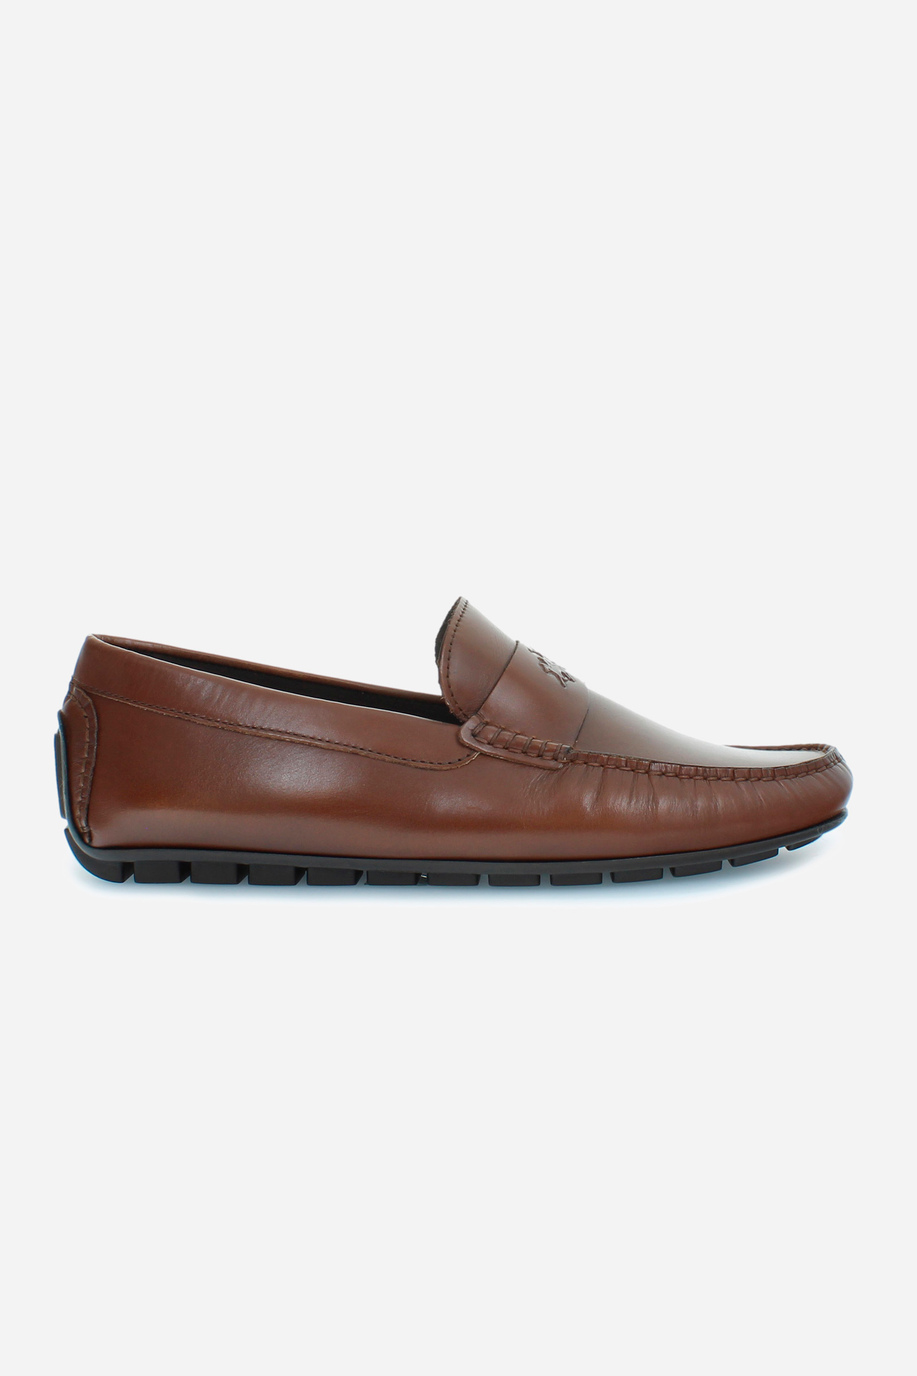 Herren-Mokassin aus Leder - Elegante Schuhe | La Martina - Official Online Shop